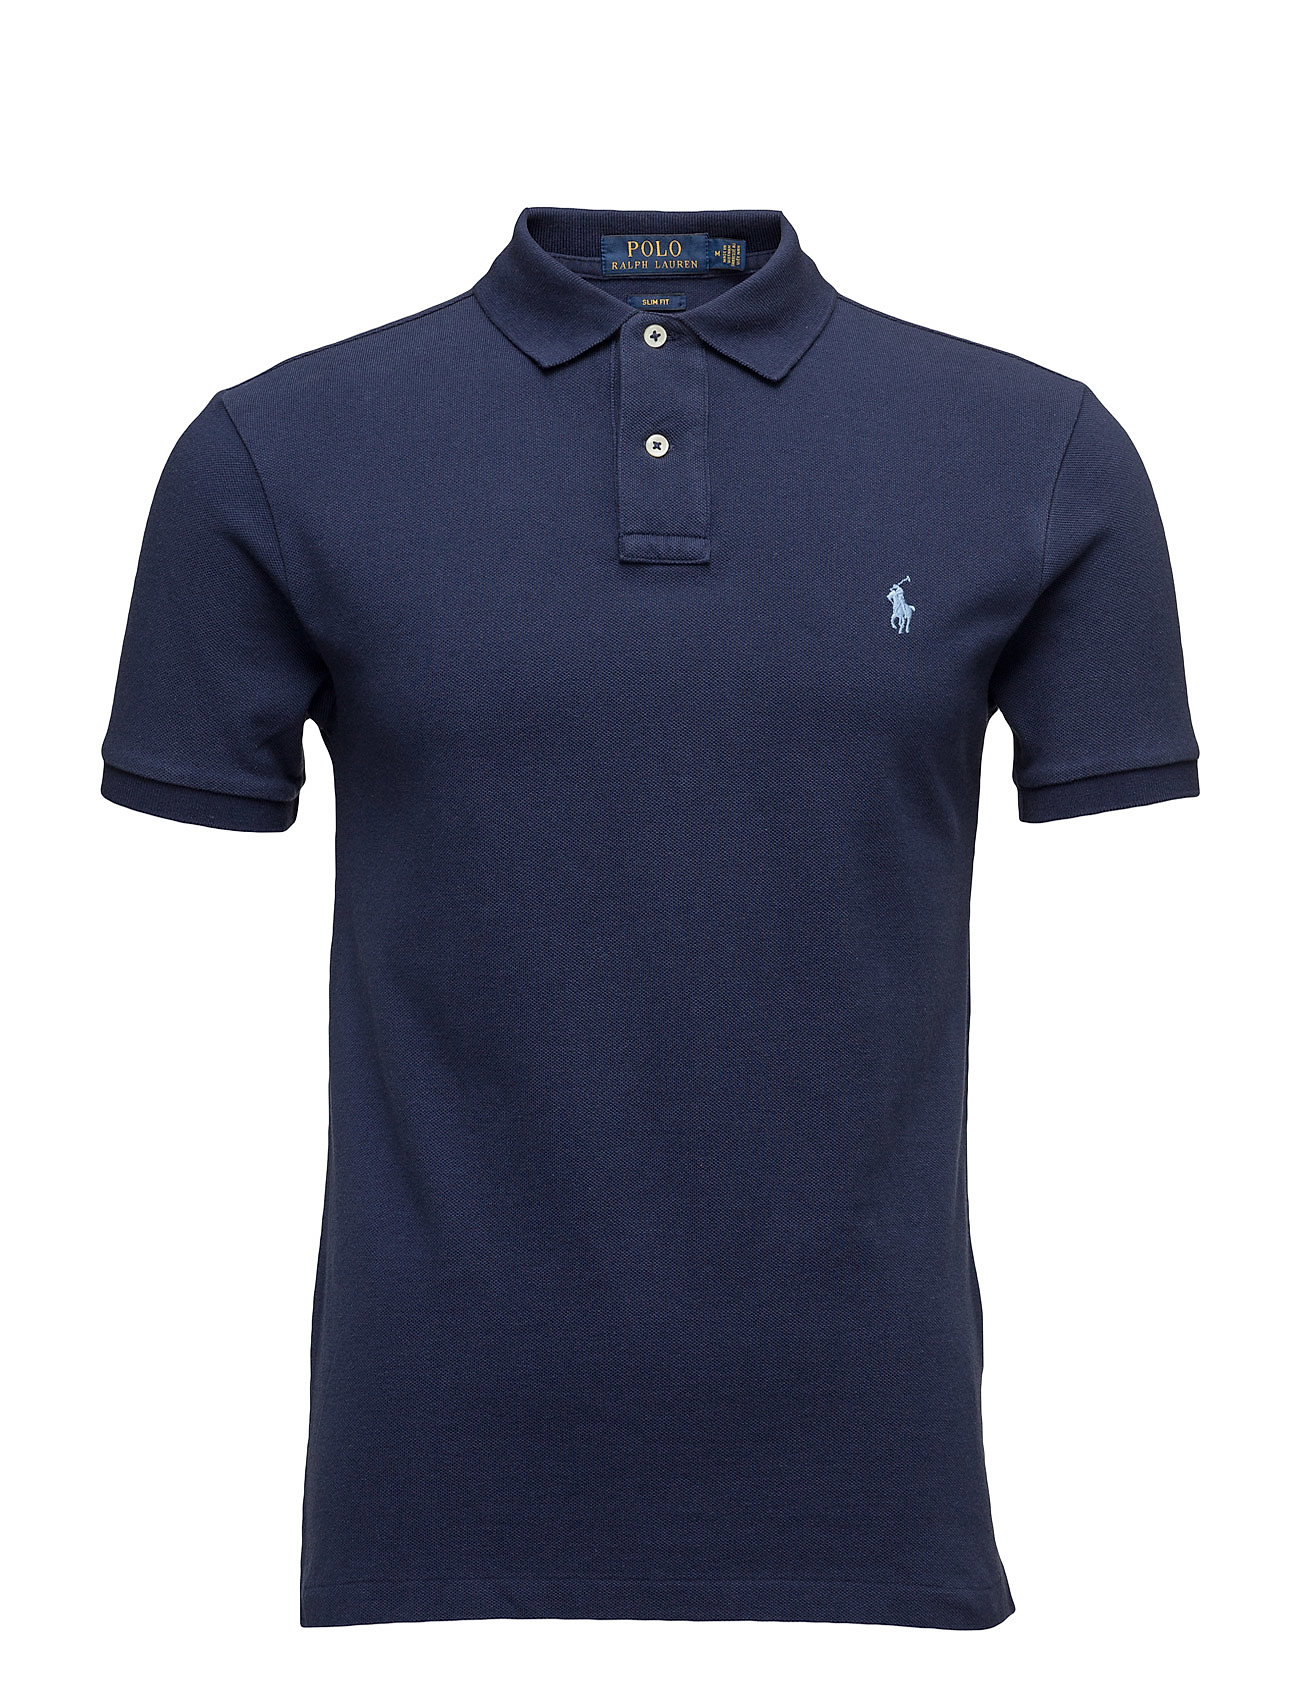 Slim Fit Mesh Polo Shirt (Newport Navy/blue) (419.40 kr) - Polo Ralph